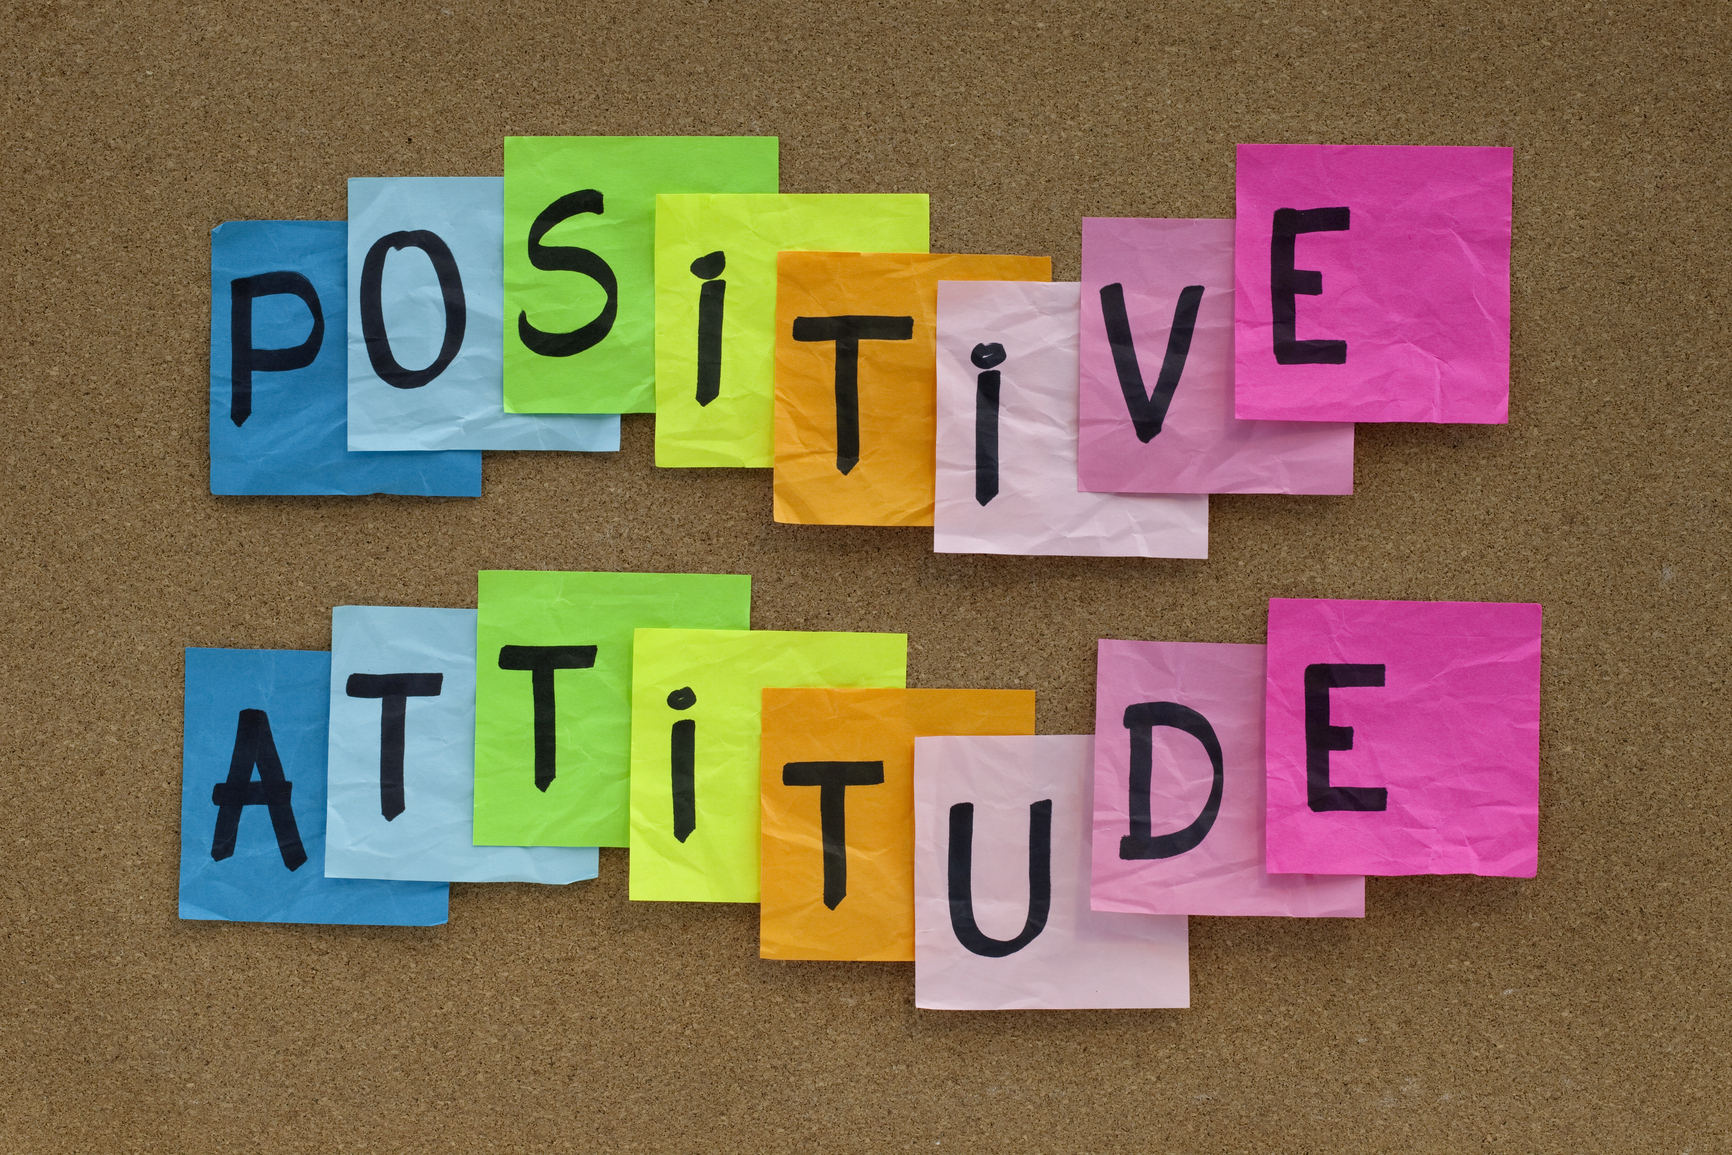 positive-attitude